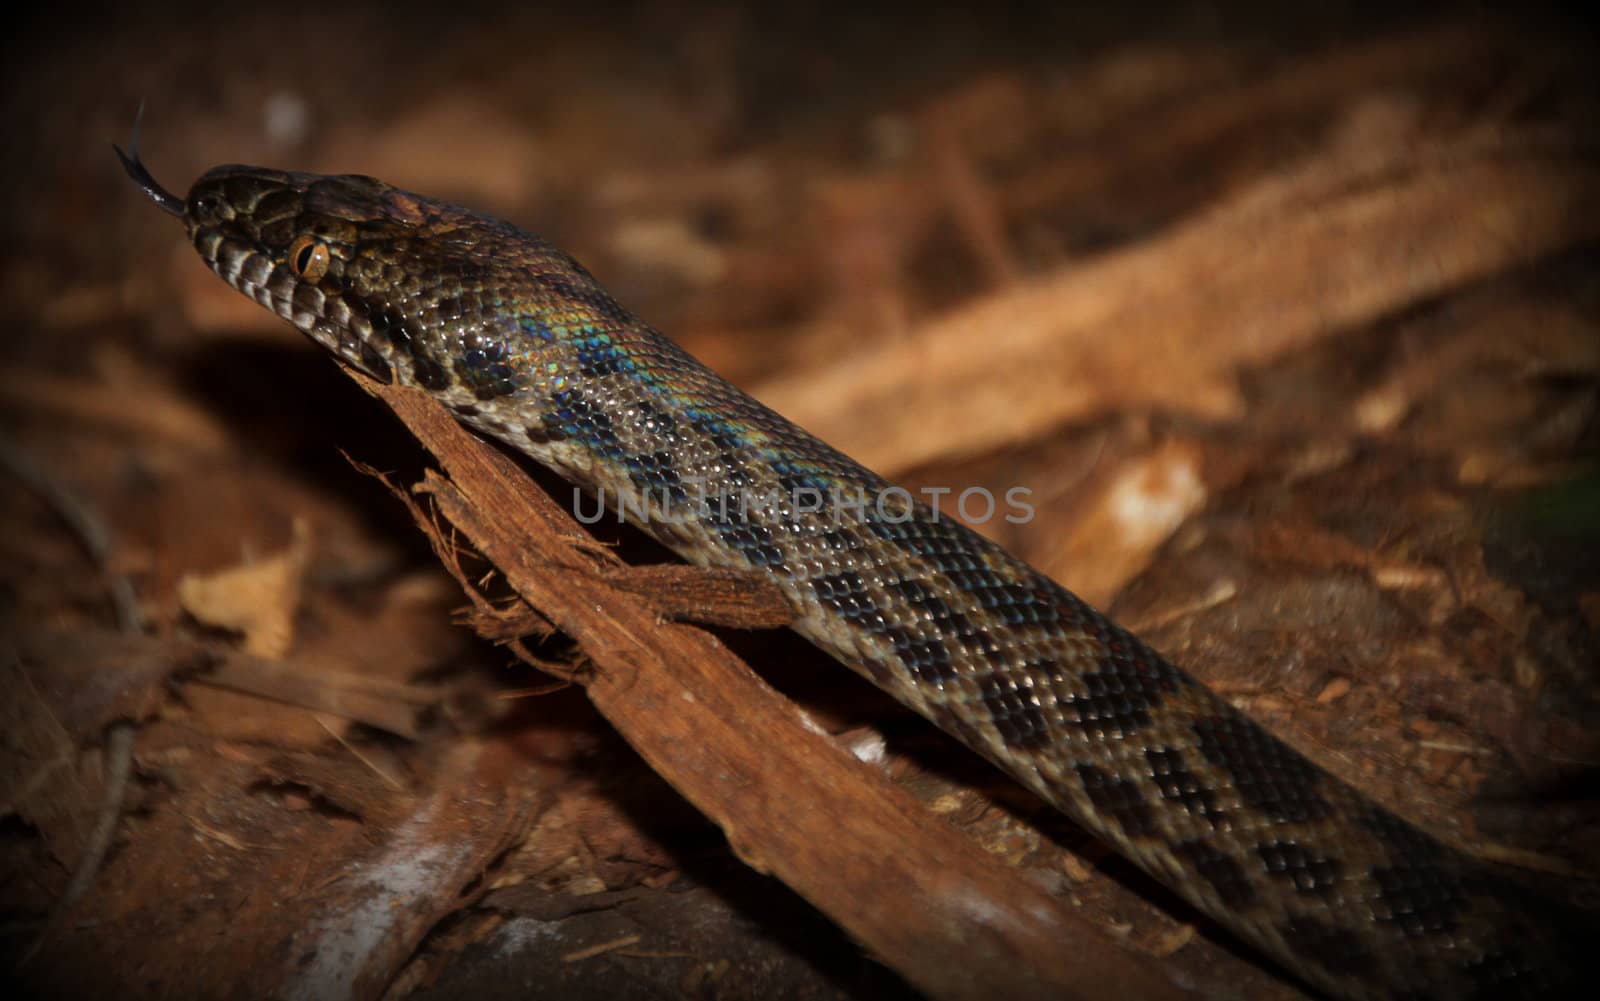 Australian Native Snake by KirbyWalkerPhotos